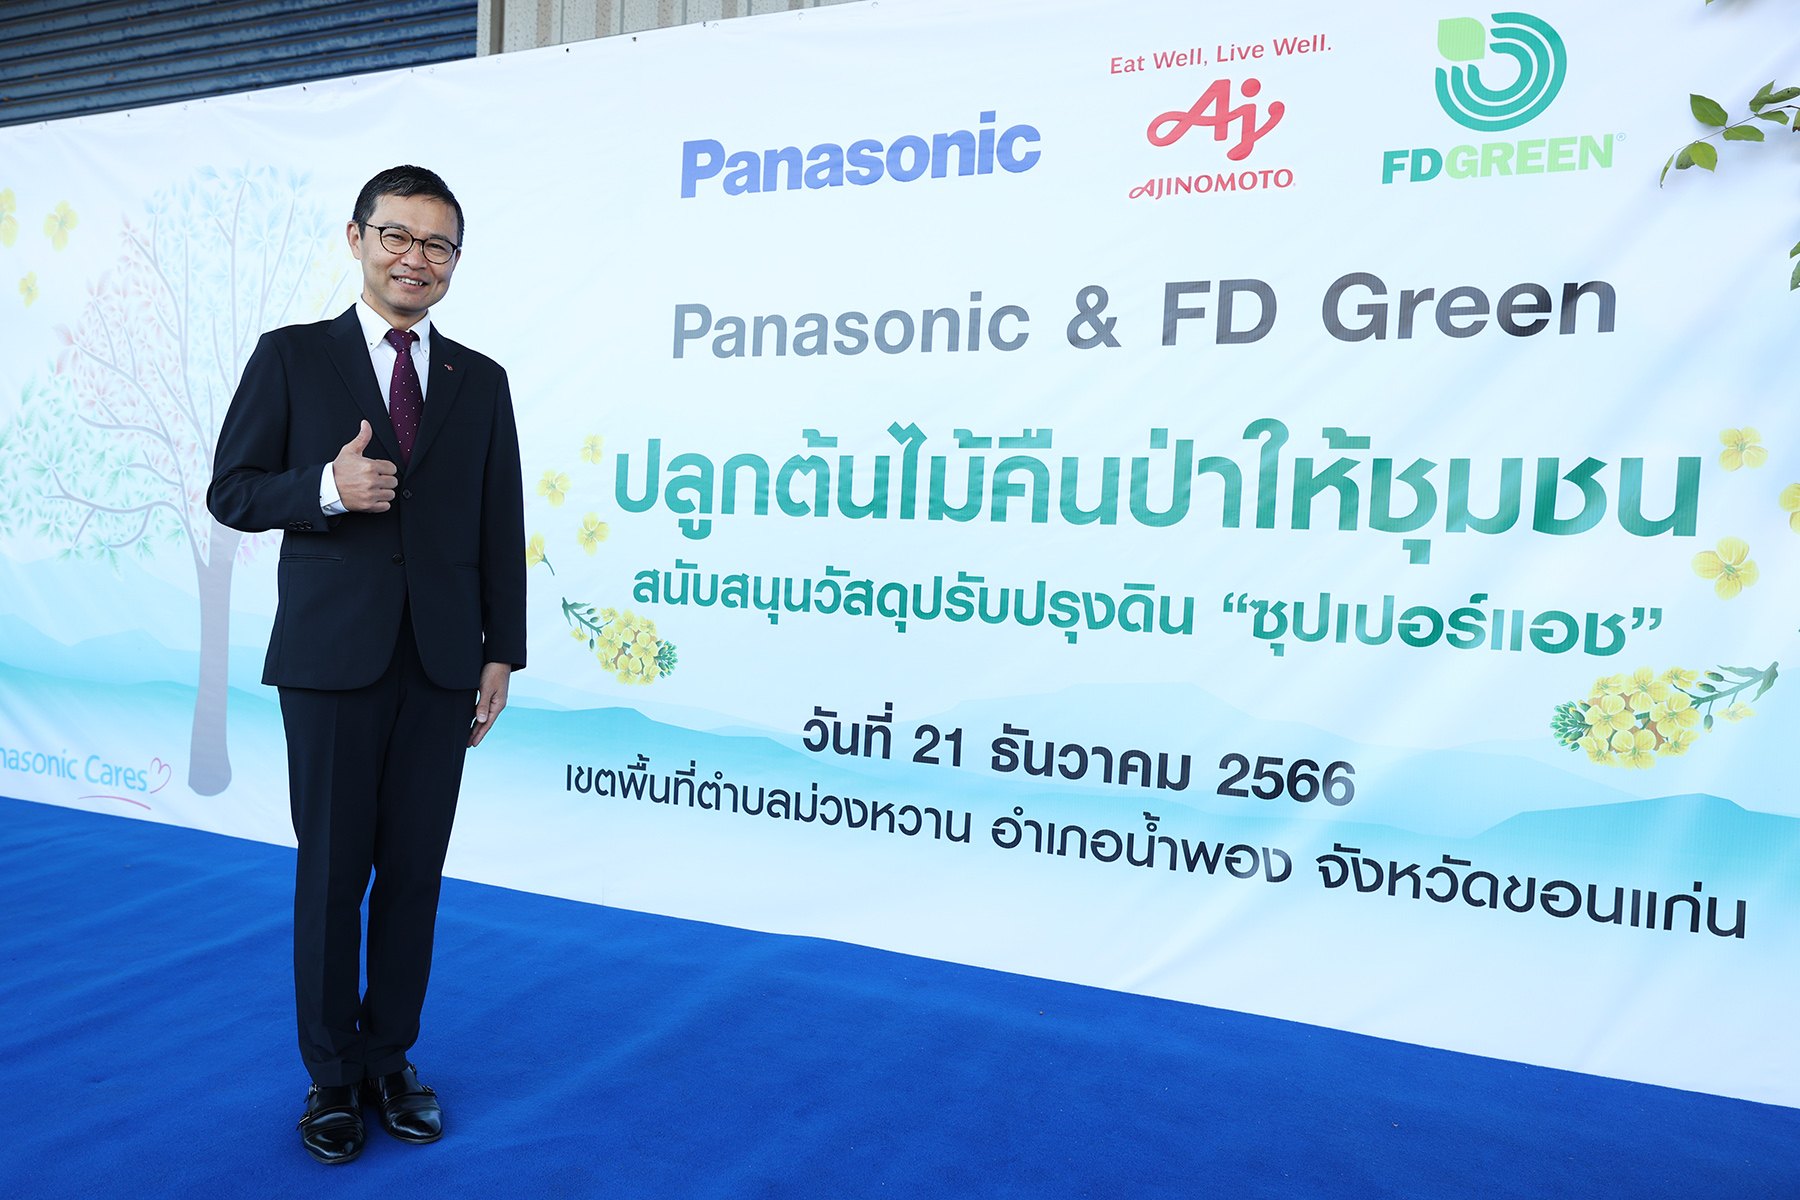 Panasonic Cares & FD Green-นายโคะเฮ อิชิกะวะ